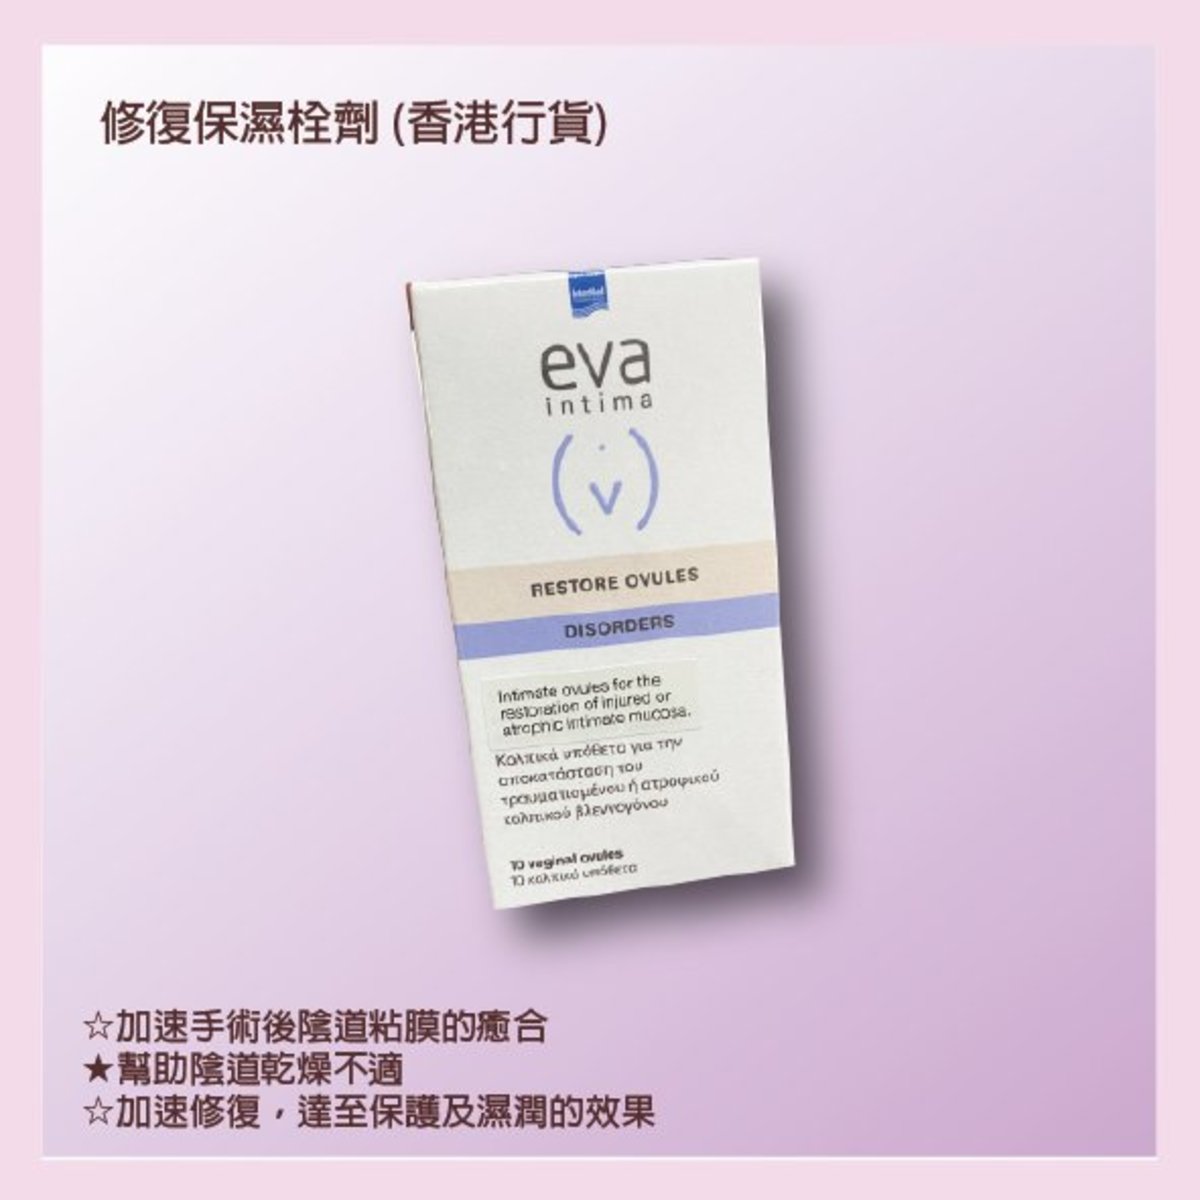 eva intima Restore Vaginal Ovules (Authorized dealer import) Exp: 2025 Mar